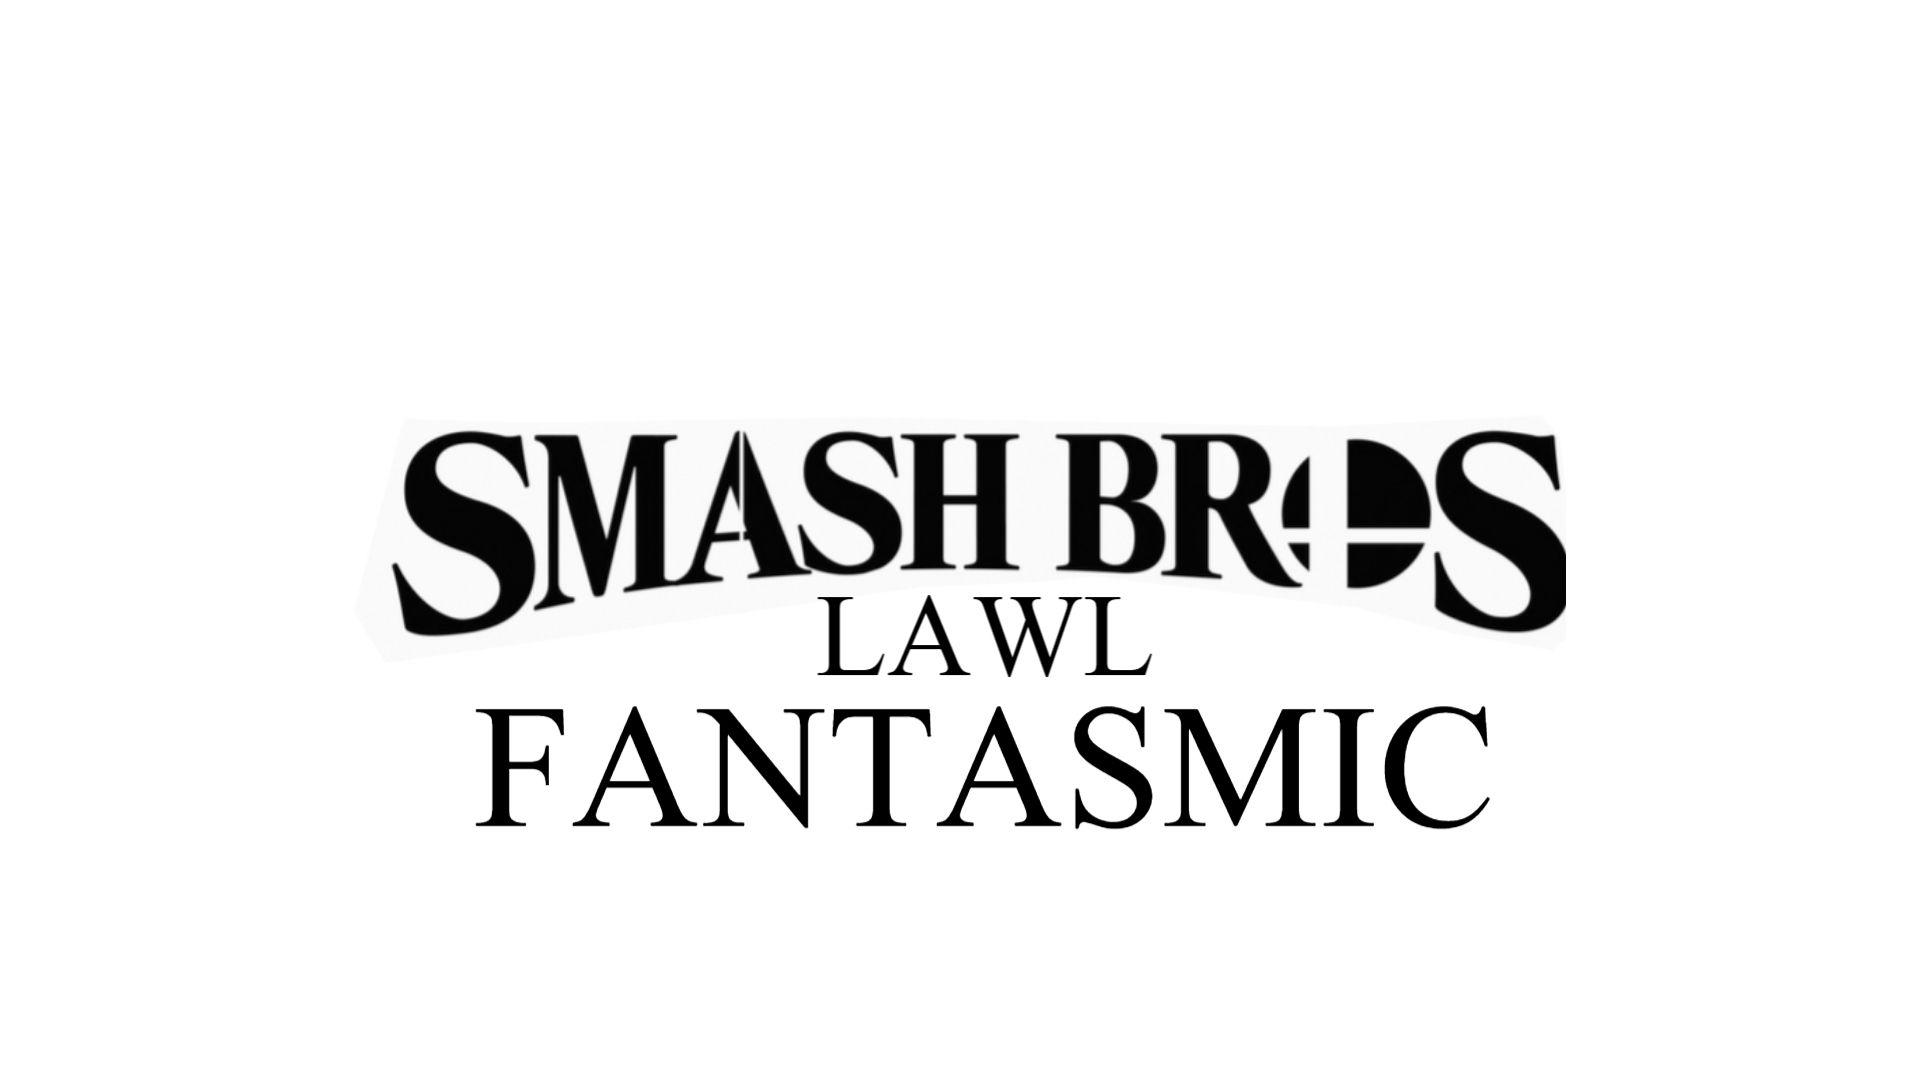 Fantasmic Logo - Smash Bros Lawl Fantasmic. Making the Crossover